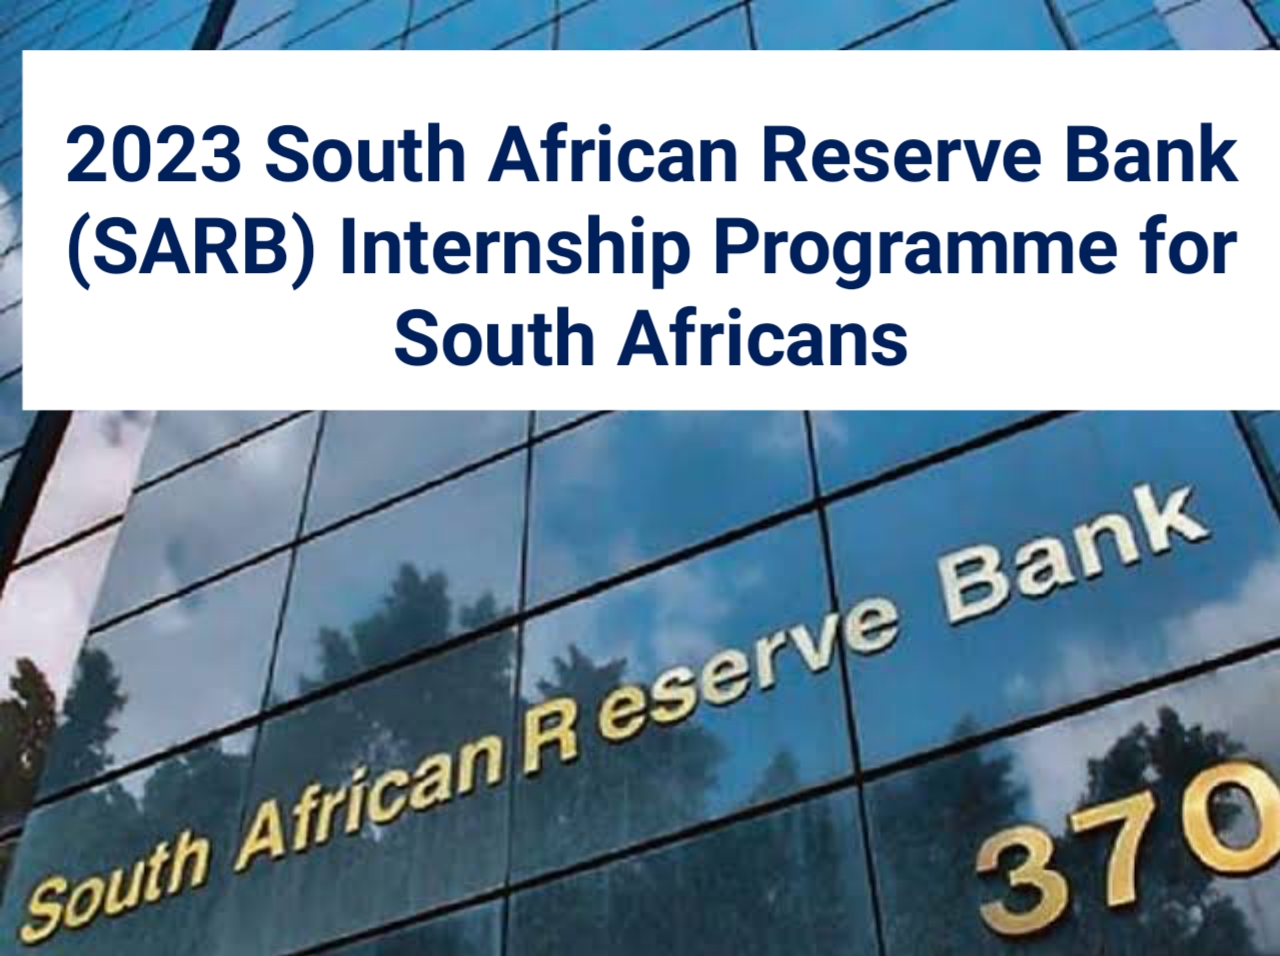 South African Reserve Bank (SARB) Graduate Internship Programme